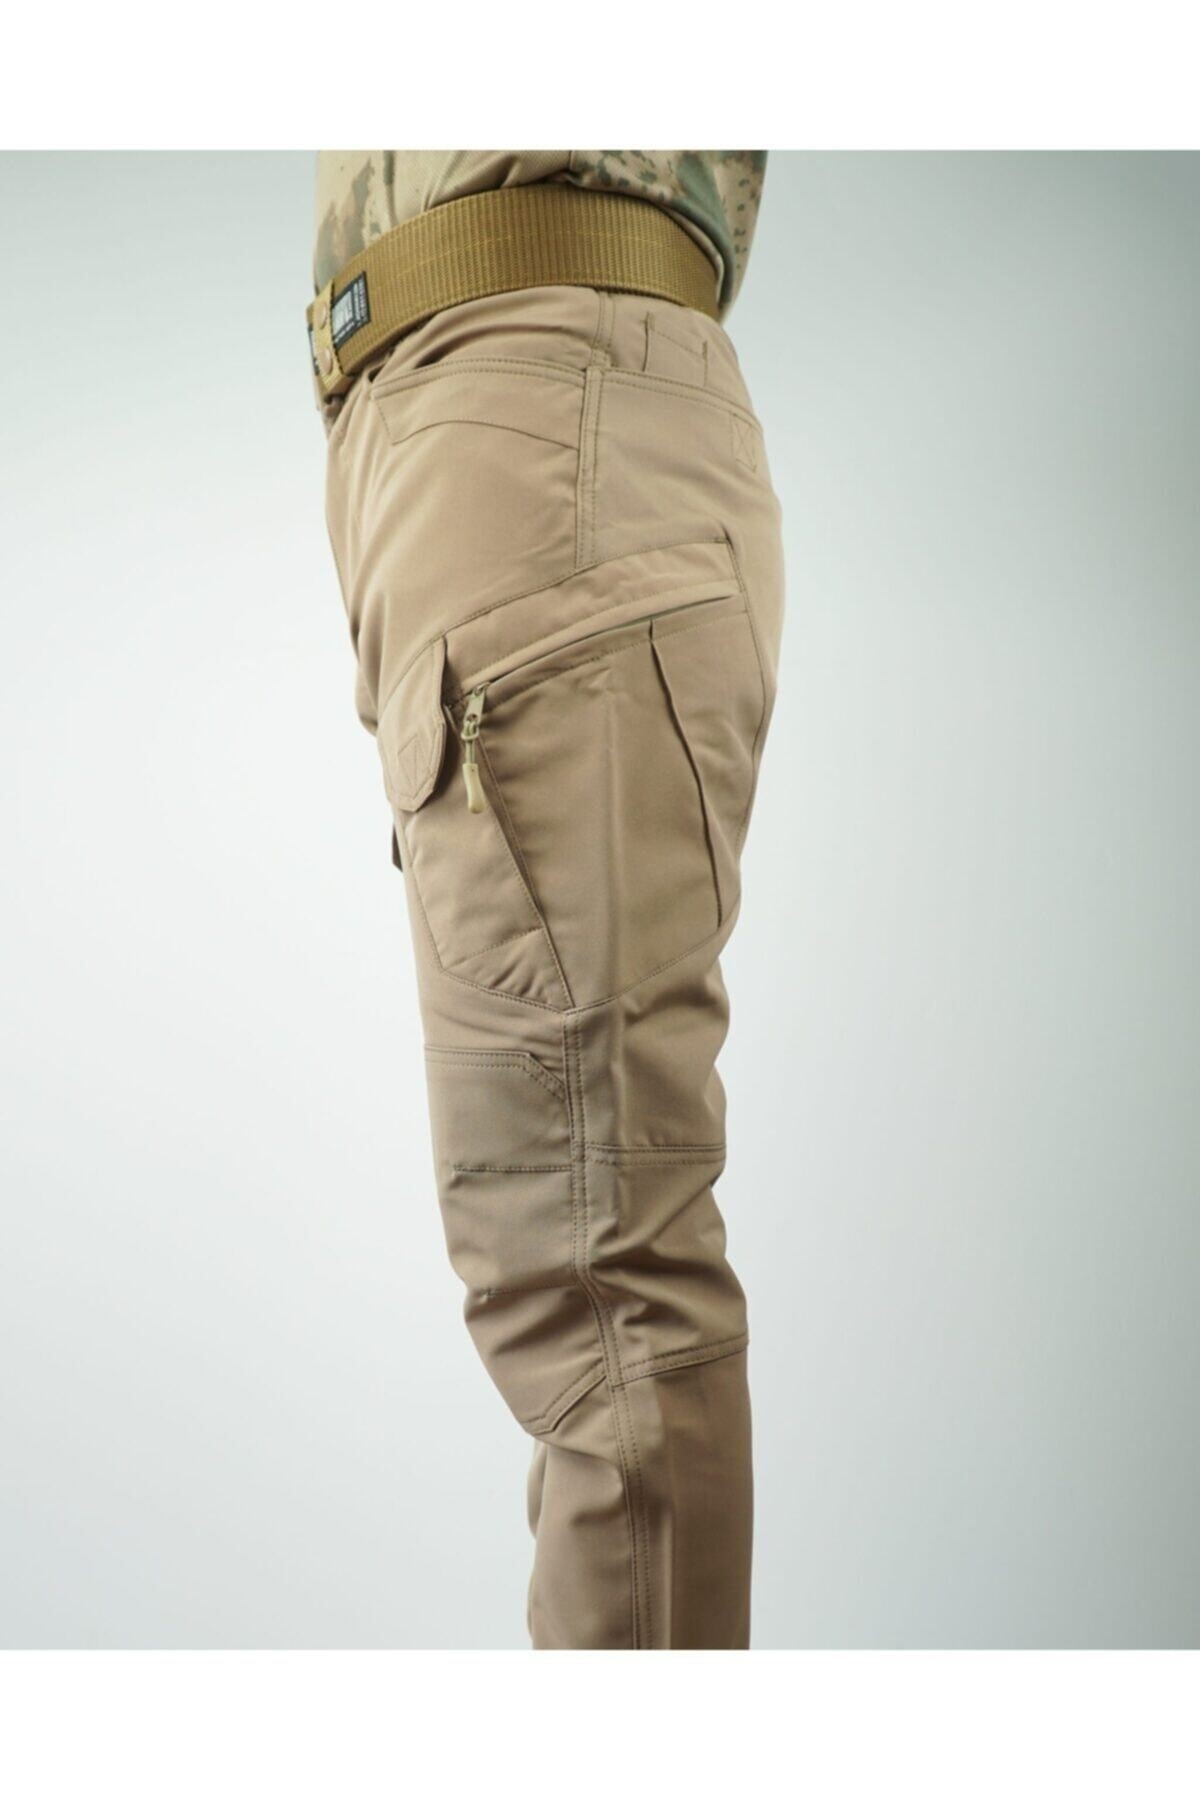 Askerimalzemelerim Erkek Tactical Outdoor Pantalon Bej